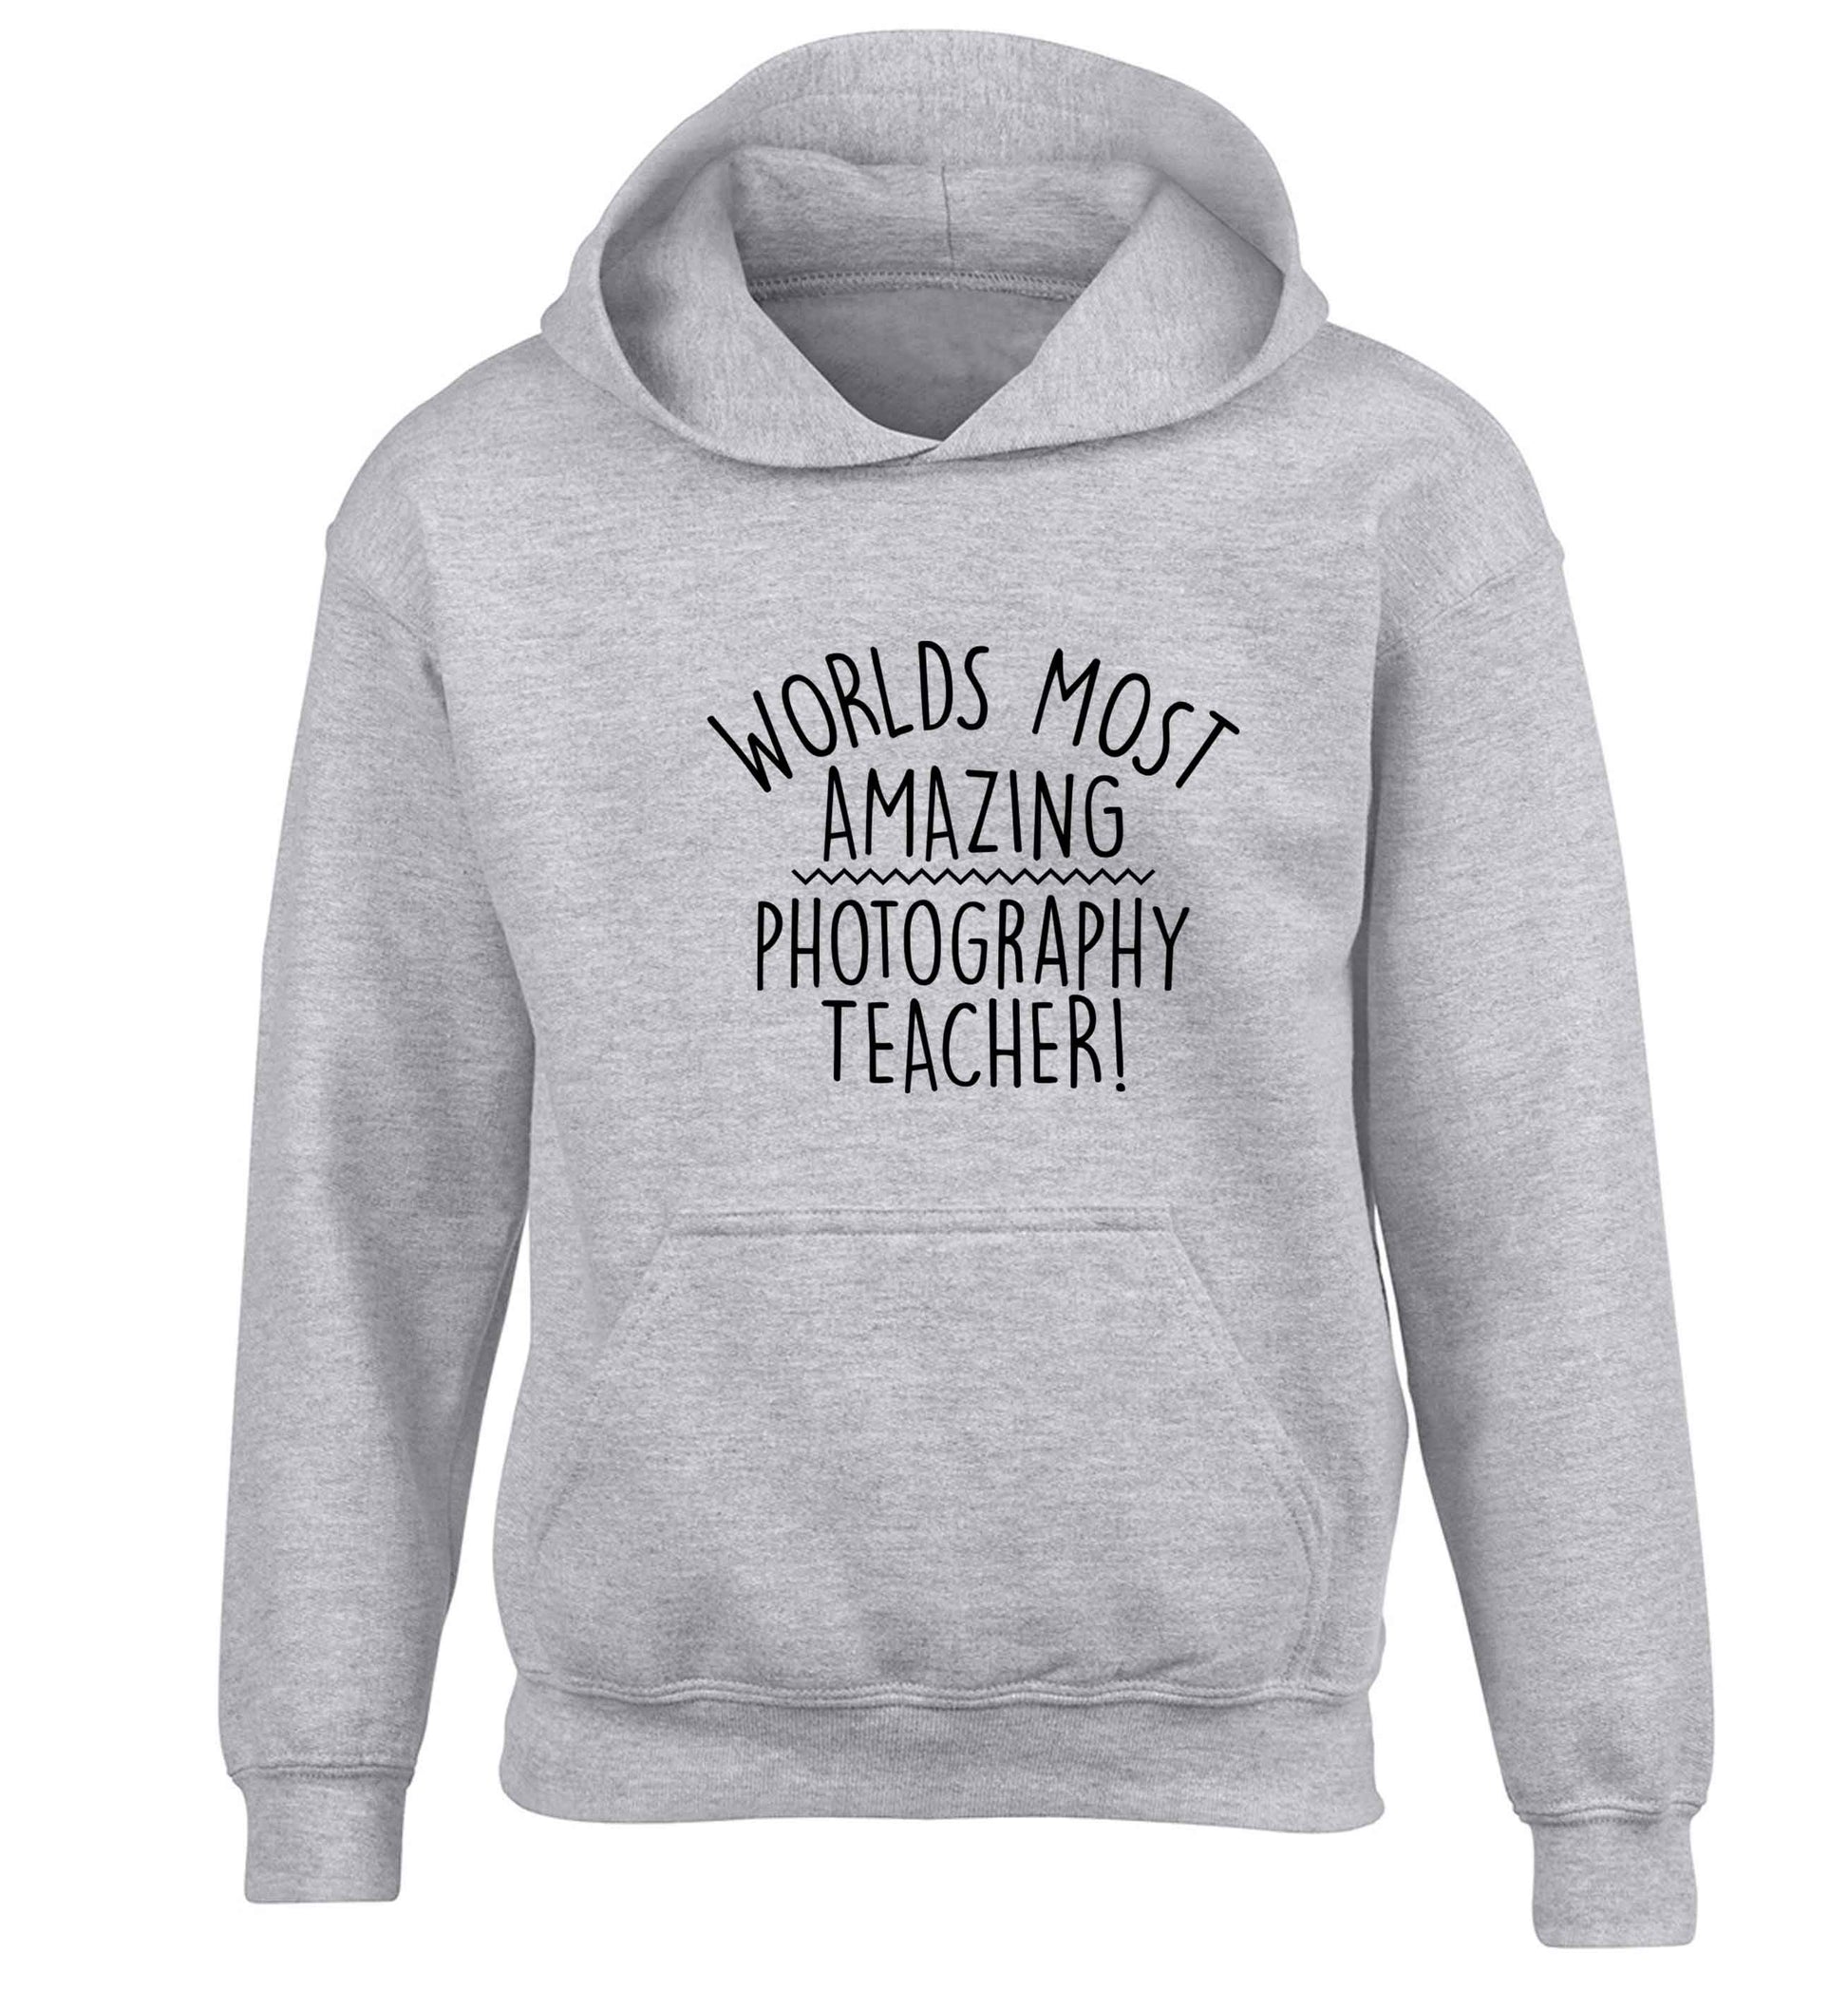 Worlds most amazing photography teacher children's grey hoodie 12-13 Years